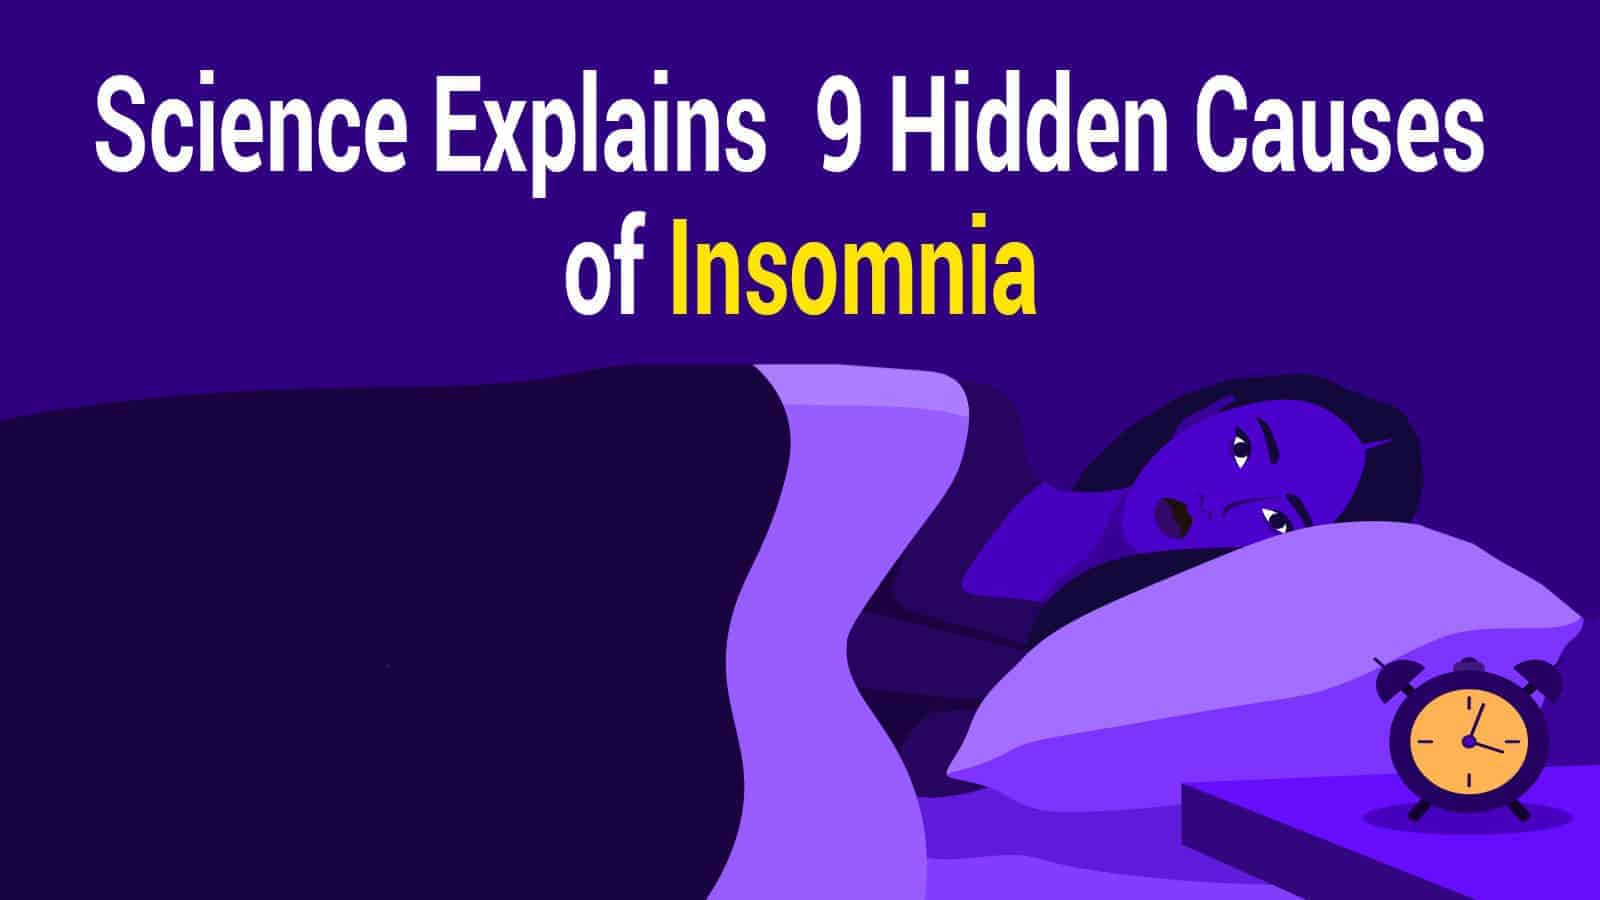 Hidden causes of Insomnia